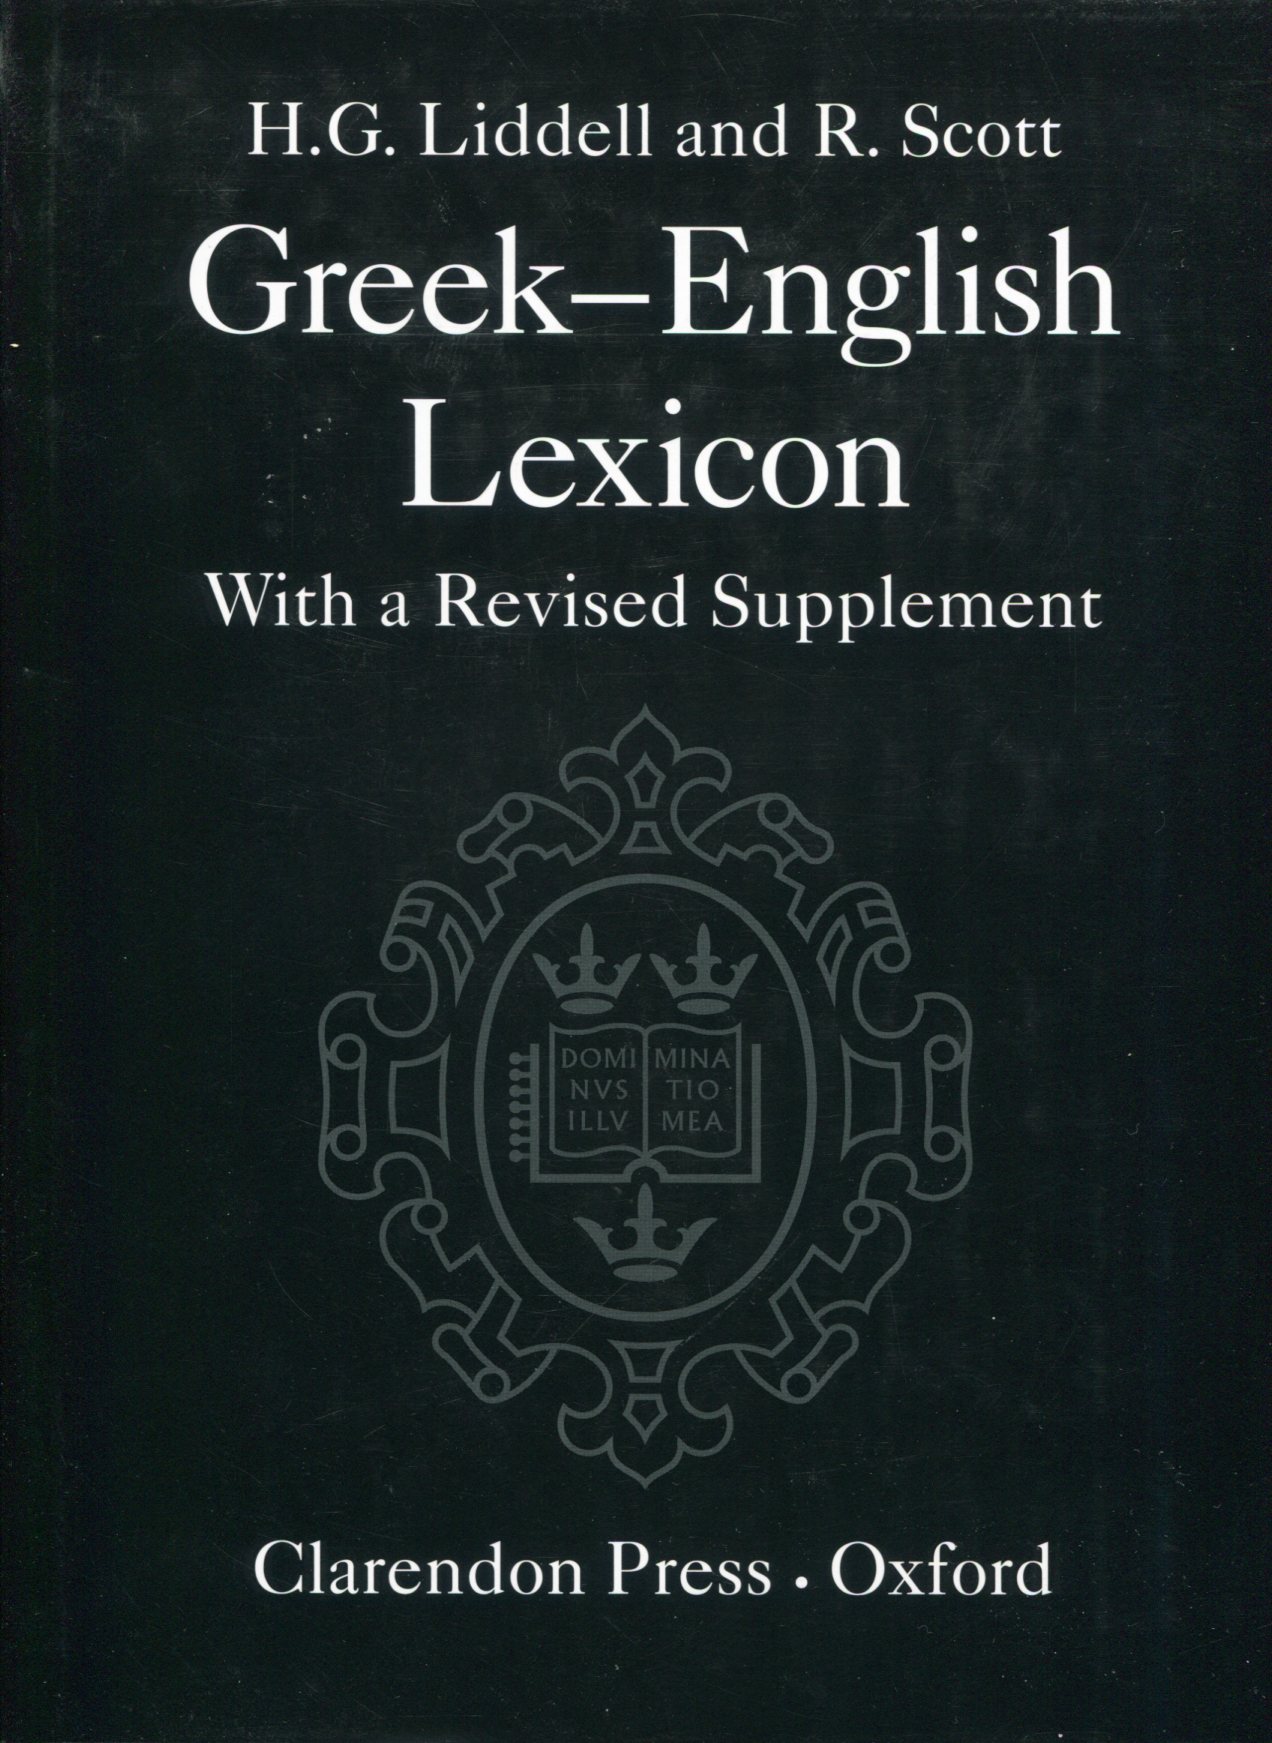 A GREEK-ENGLISH LEXICON